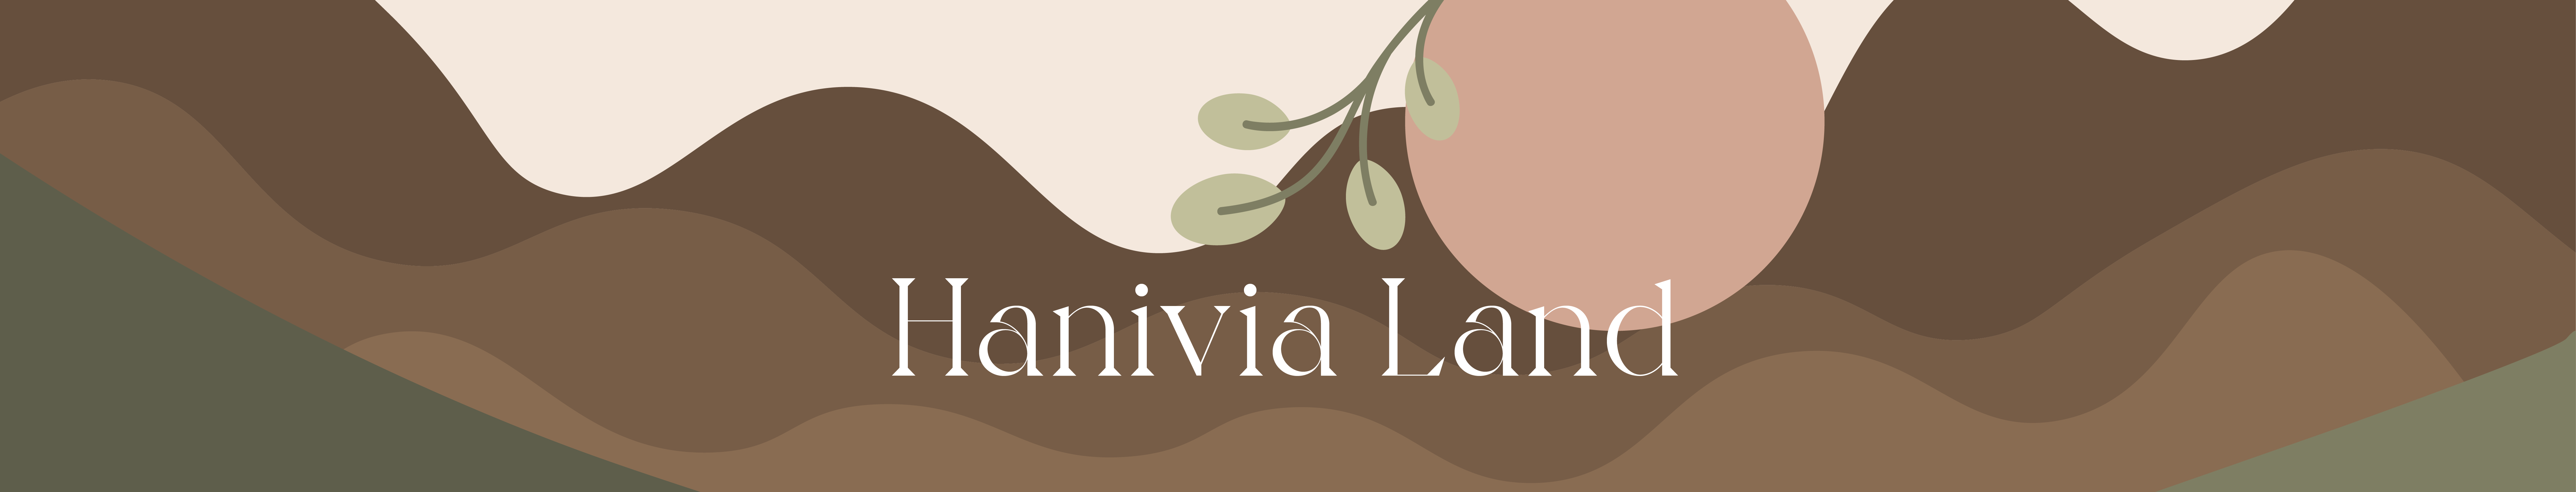 Banner de perfil de Hanivia Land